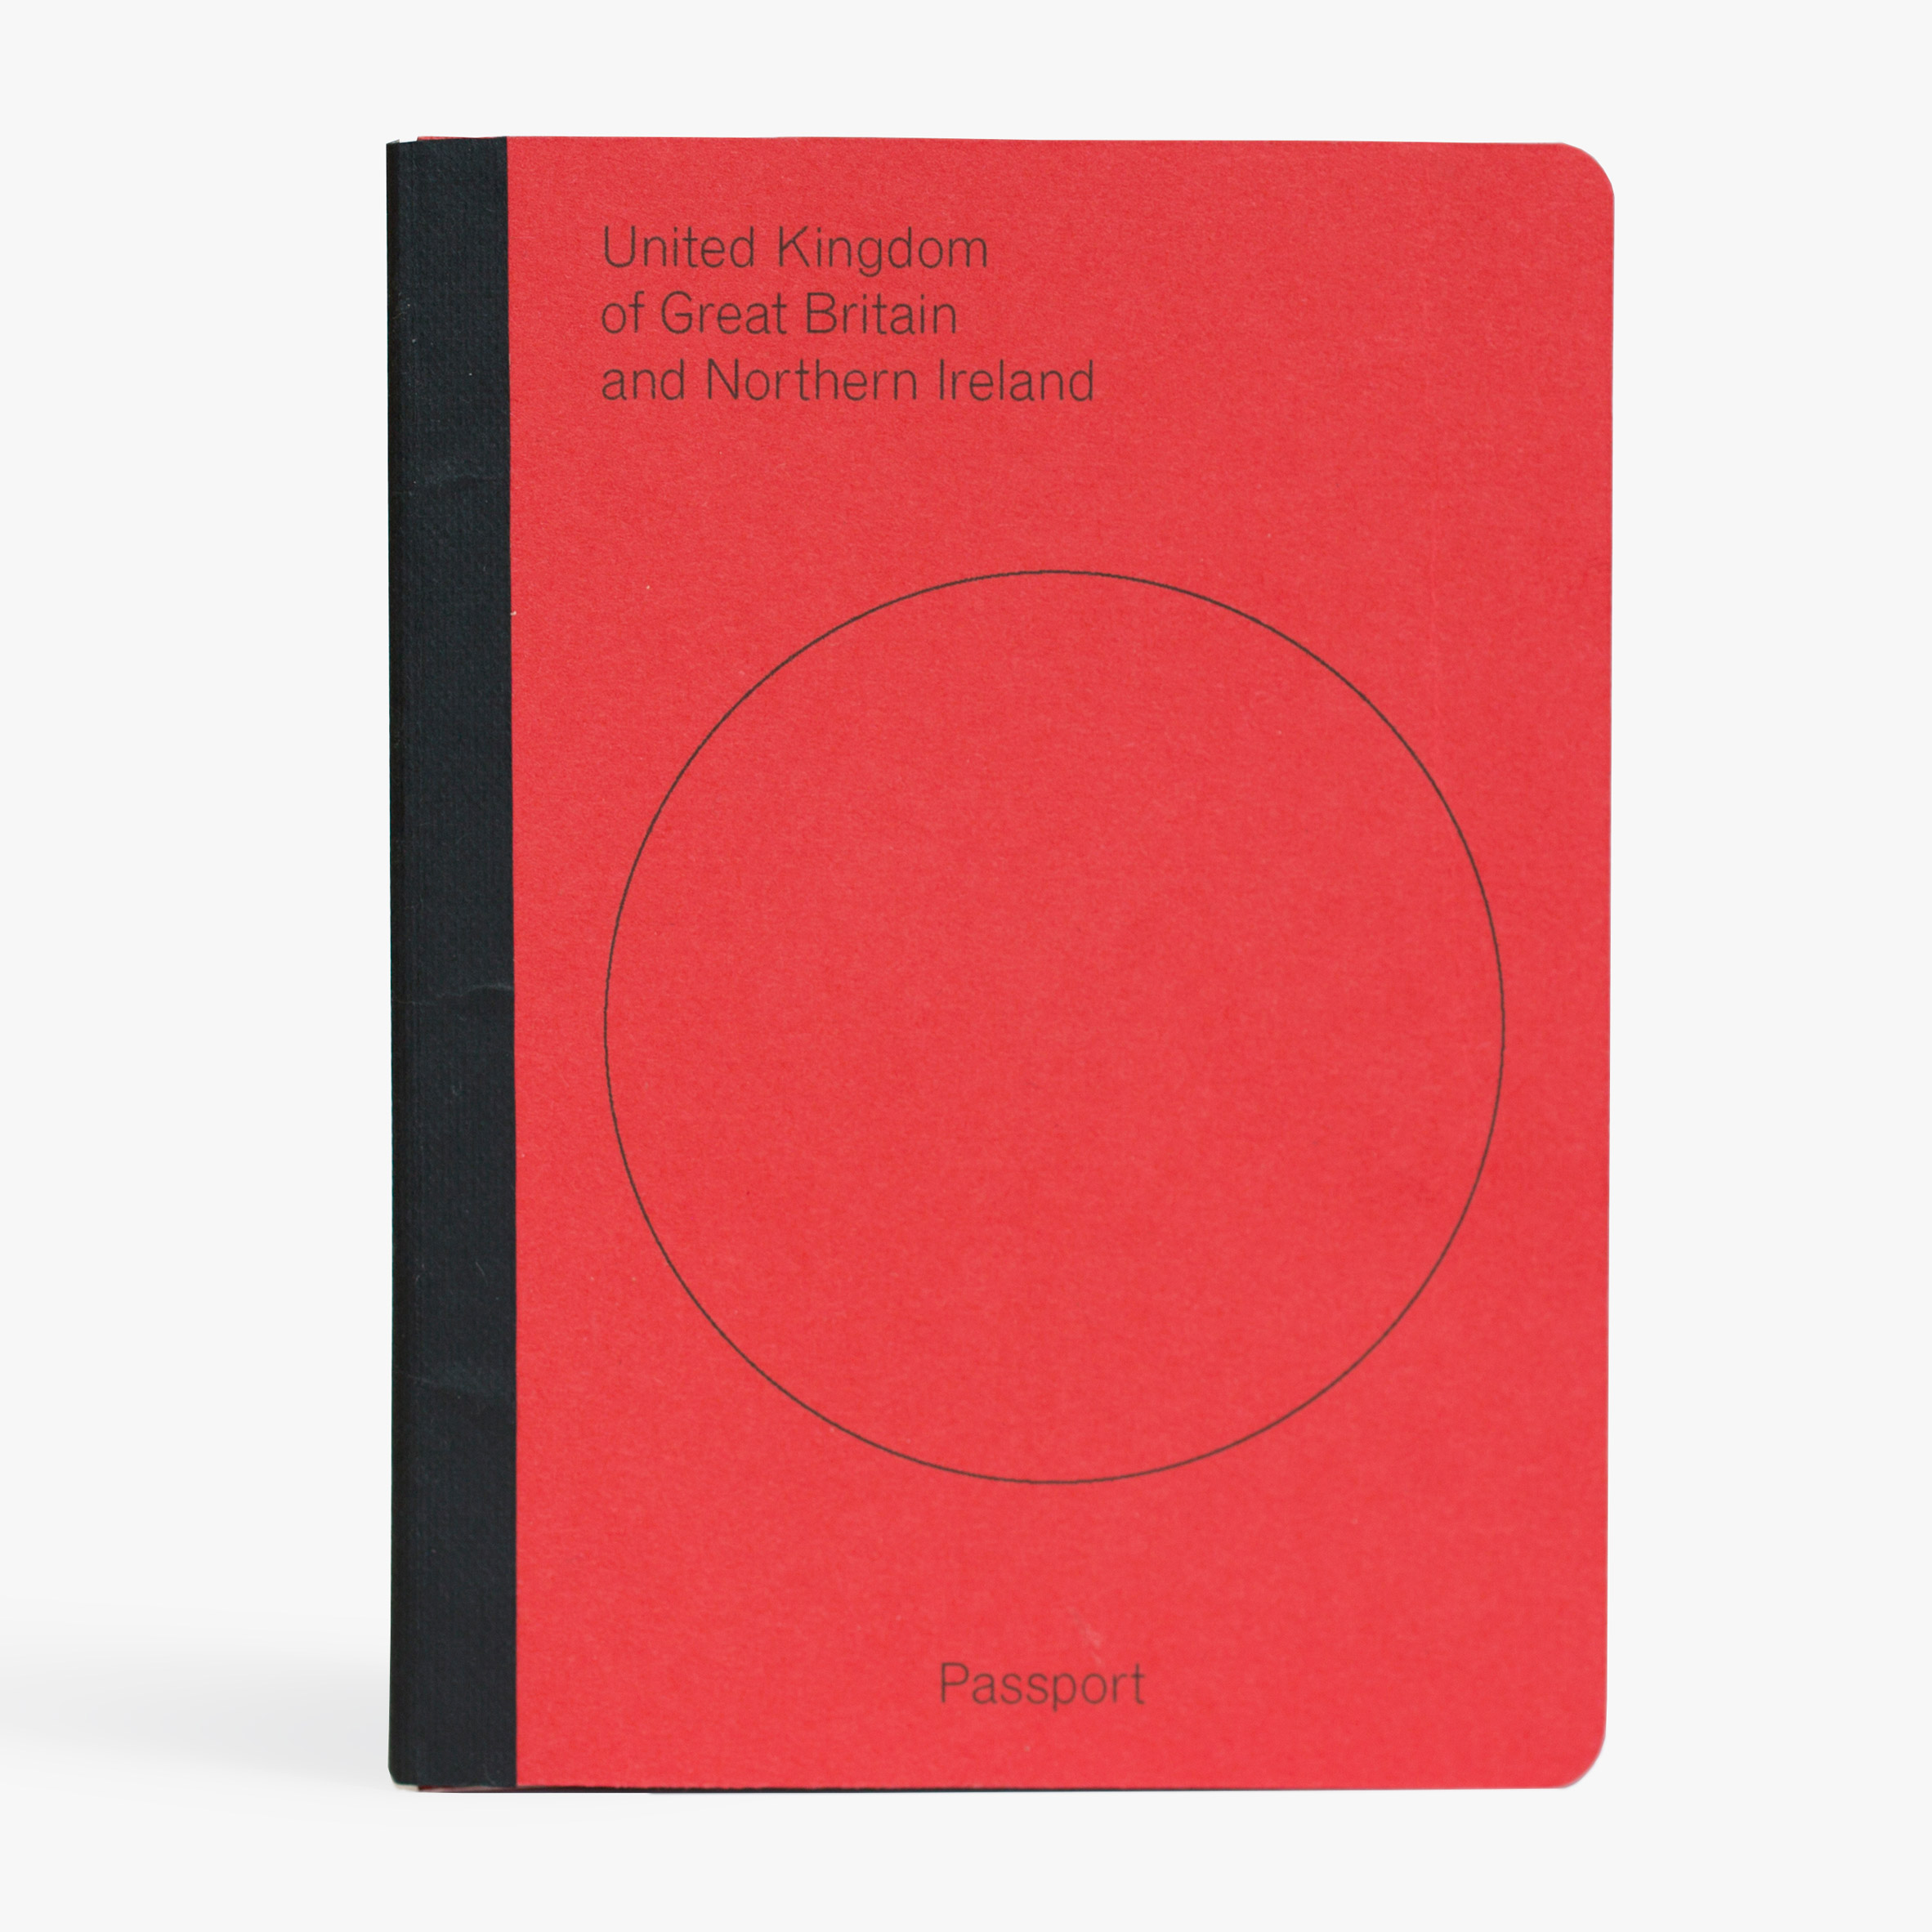 Passport design by Steph Roden and Sarah Bethan Jones